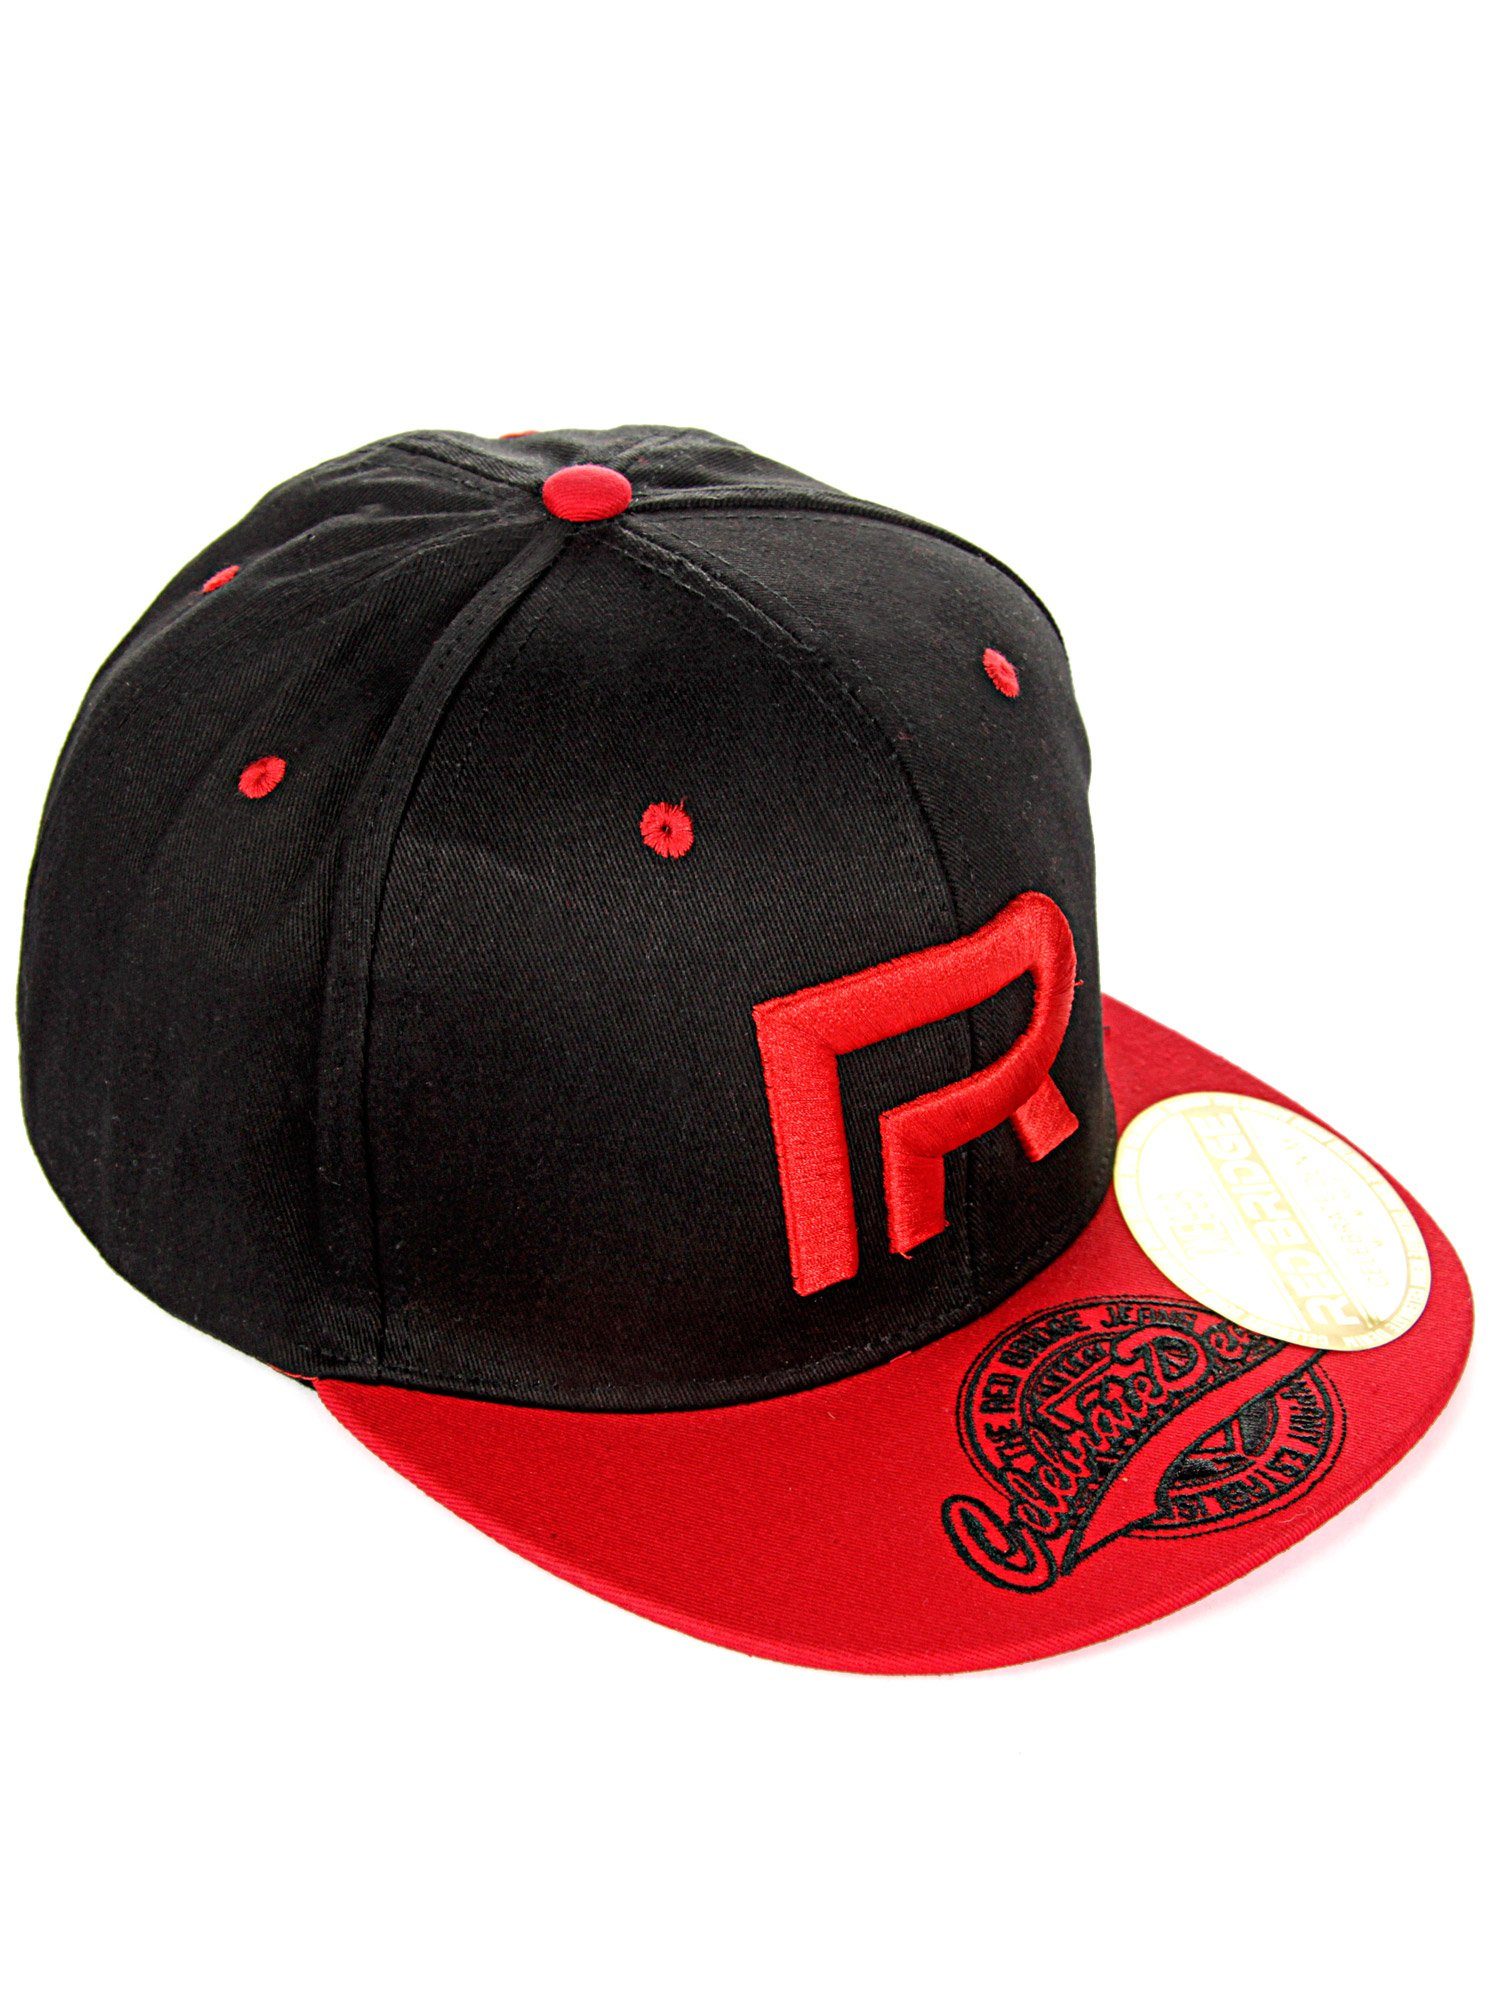 schwarz-rot Cap mit Wellingborough RedBridge Baseball Druckverschluss